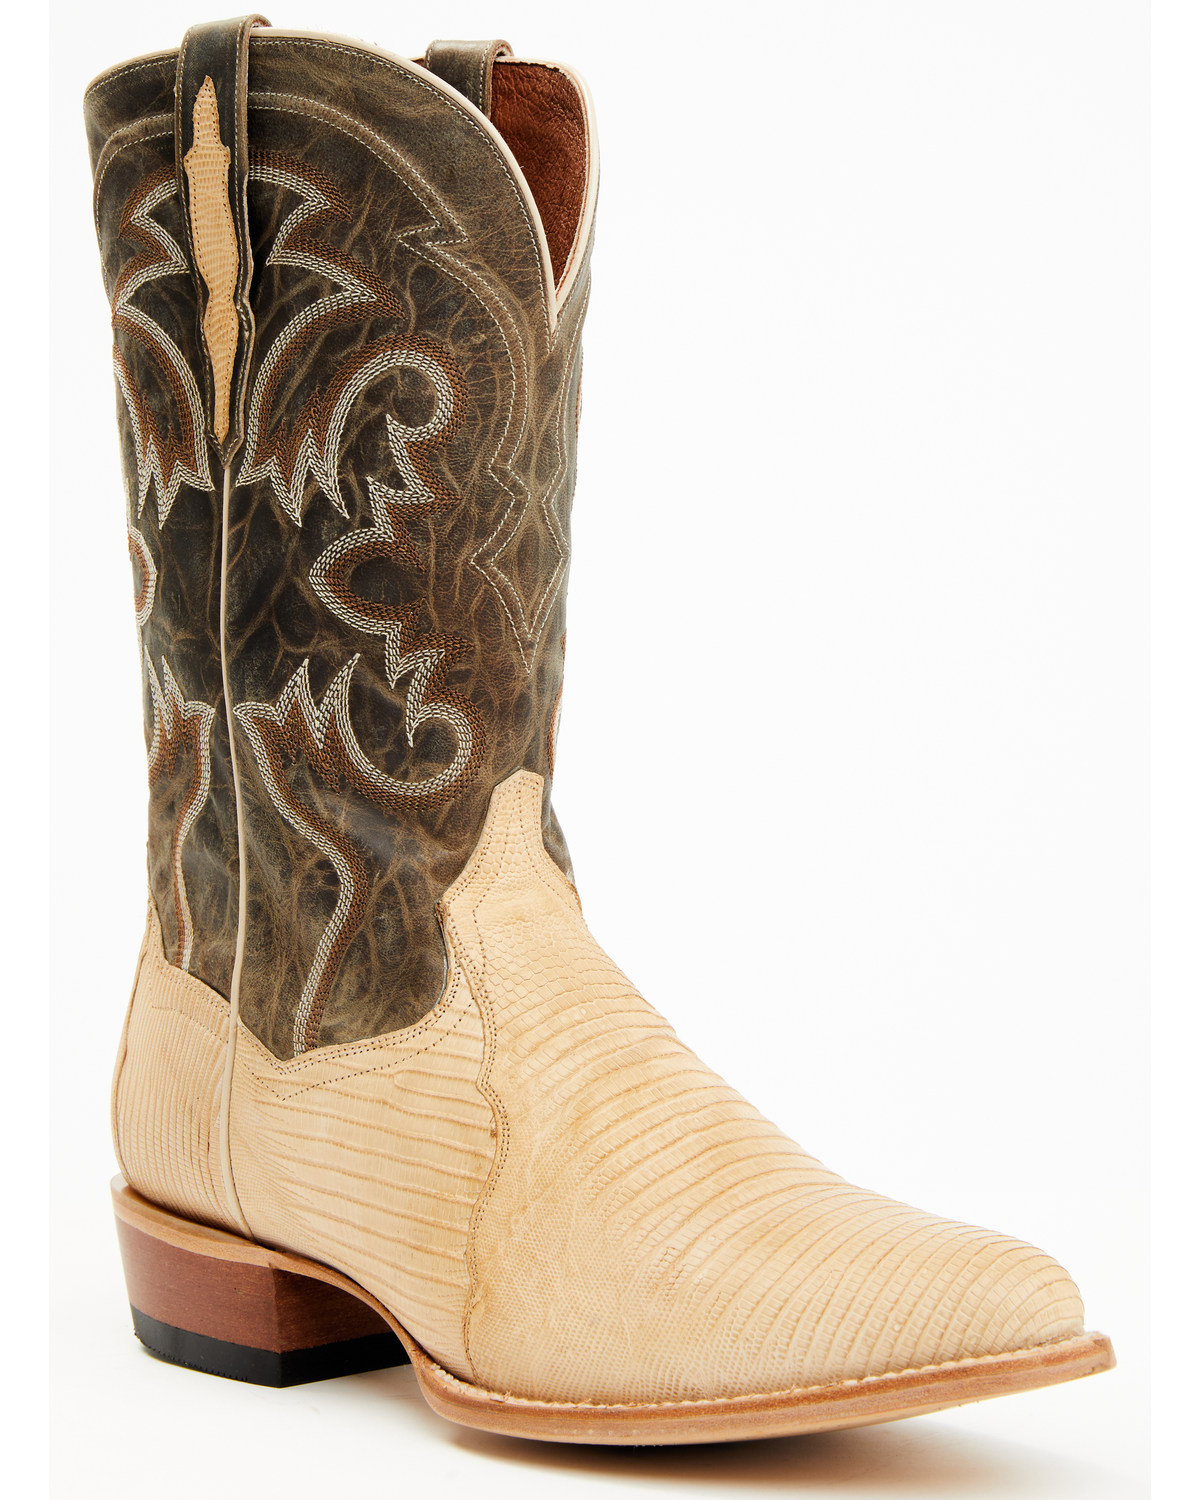 Dan Post Men's Exotic Teju Lizard Western Boots - Medium Toe